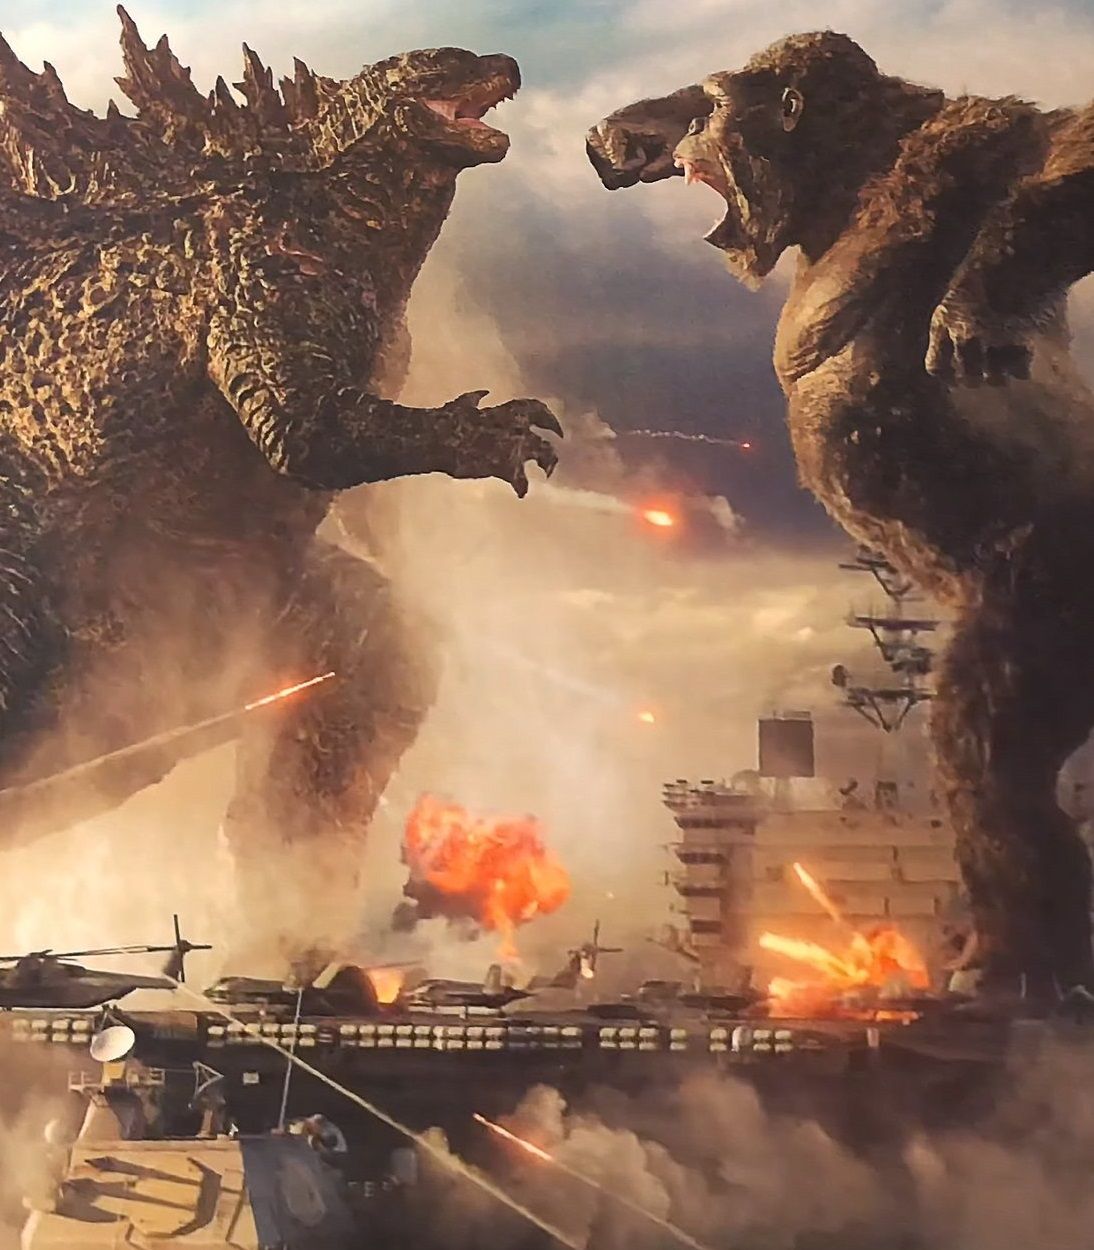 Godzilla vs. Kong gets a new image from Playmates Toys